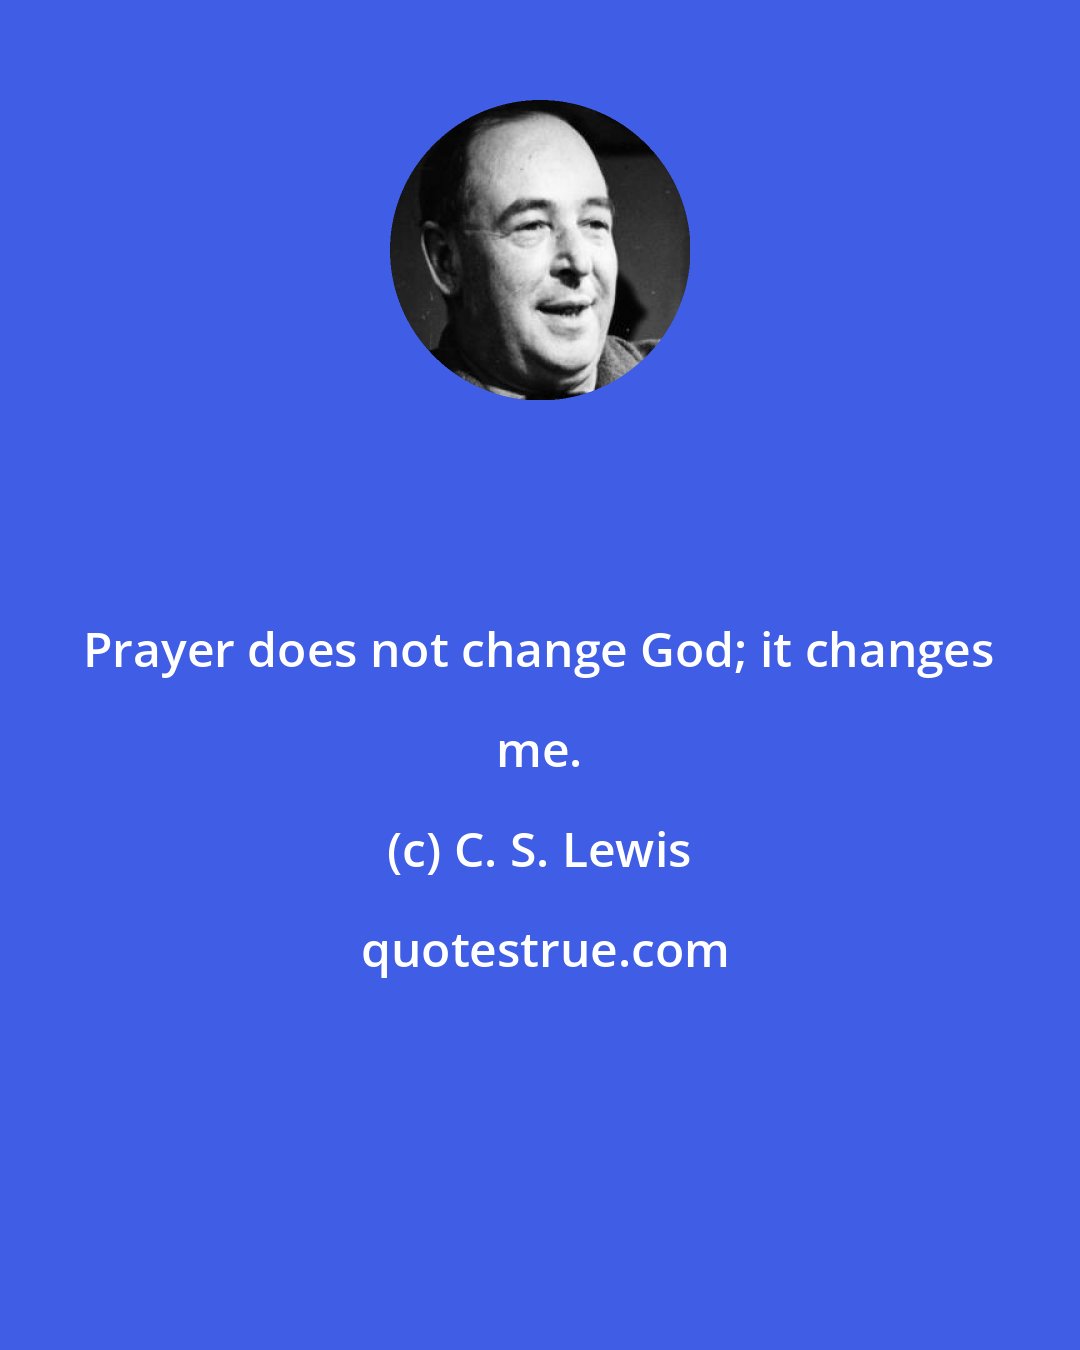 C. S. Lewis: Prayer does not change God; it changes me.